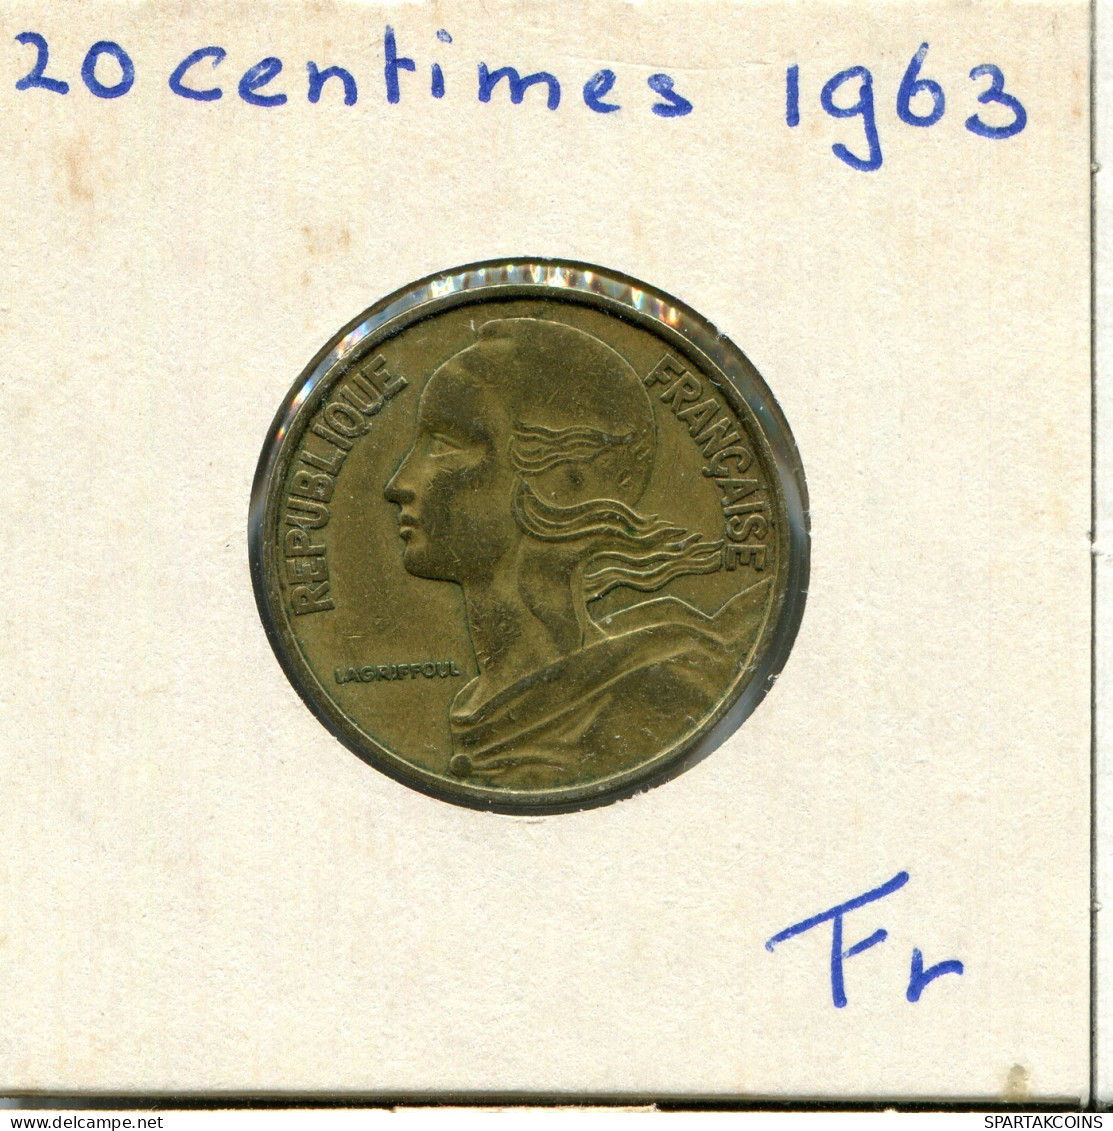 20 CENTIMES 1963 FRANCE Coin #AX039.U.A - 20 Centimes